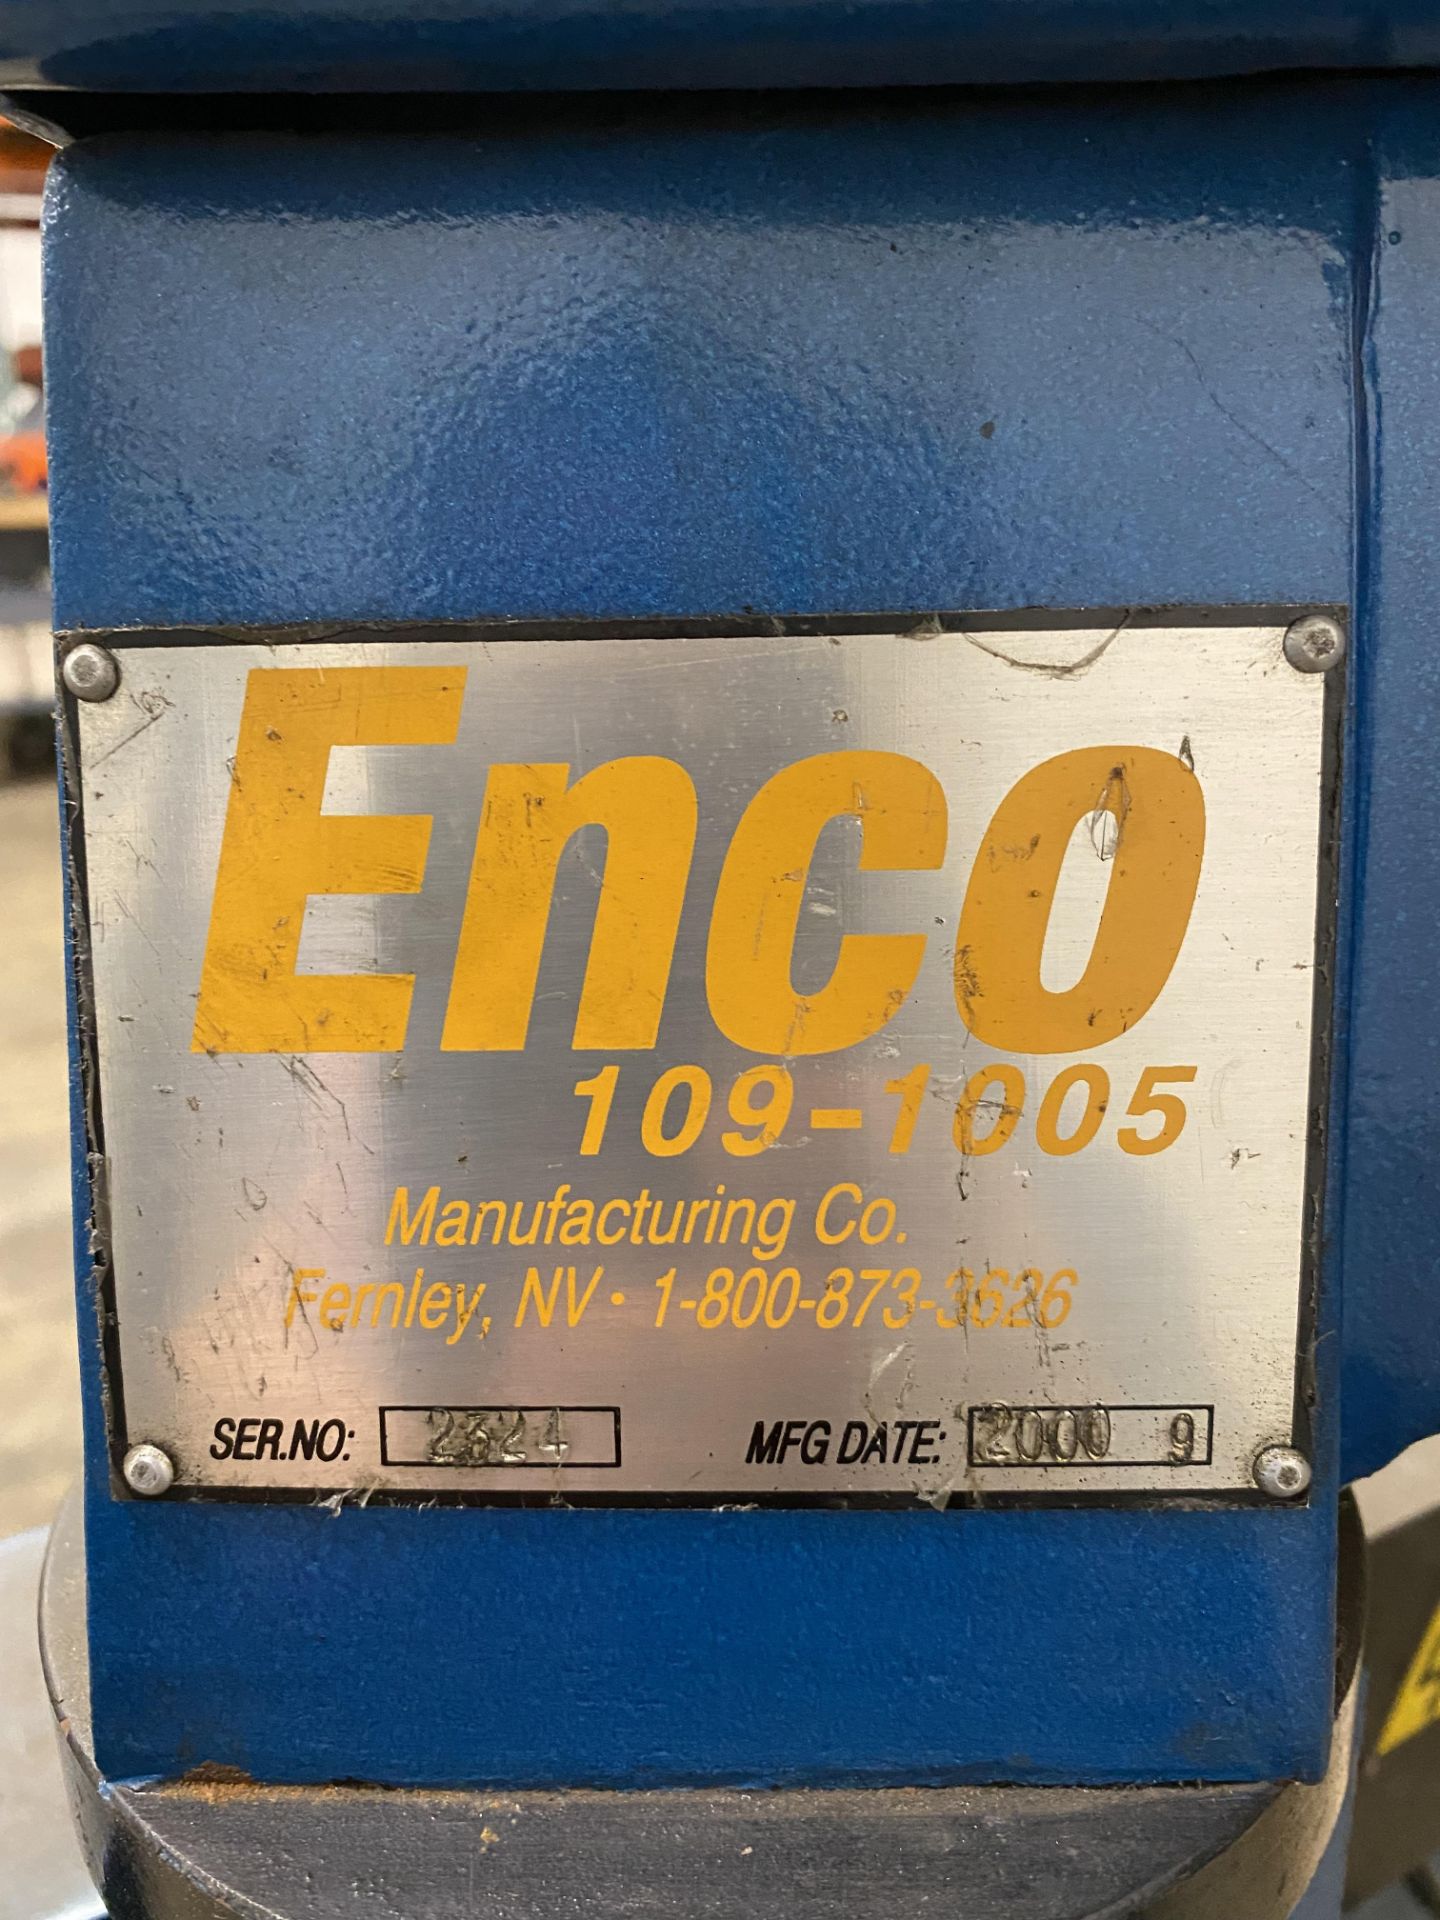 Enco 109-1005 Lathe Mill Drill Combo Machine (2000) - Image 3 of 6